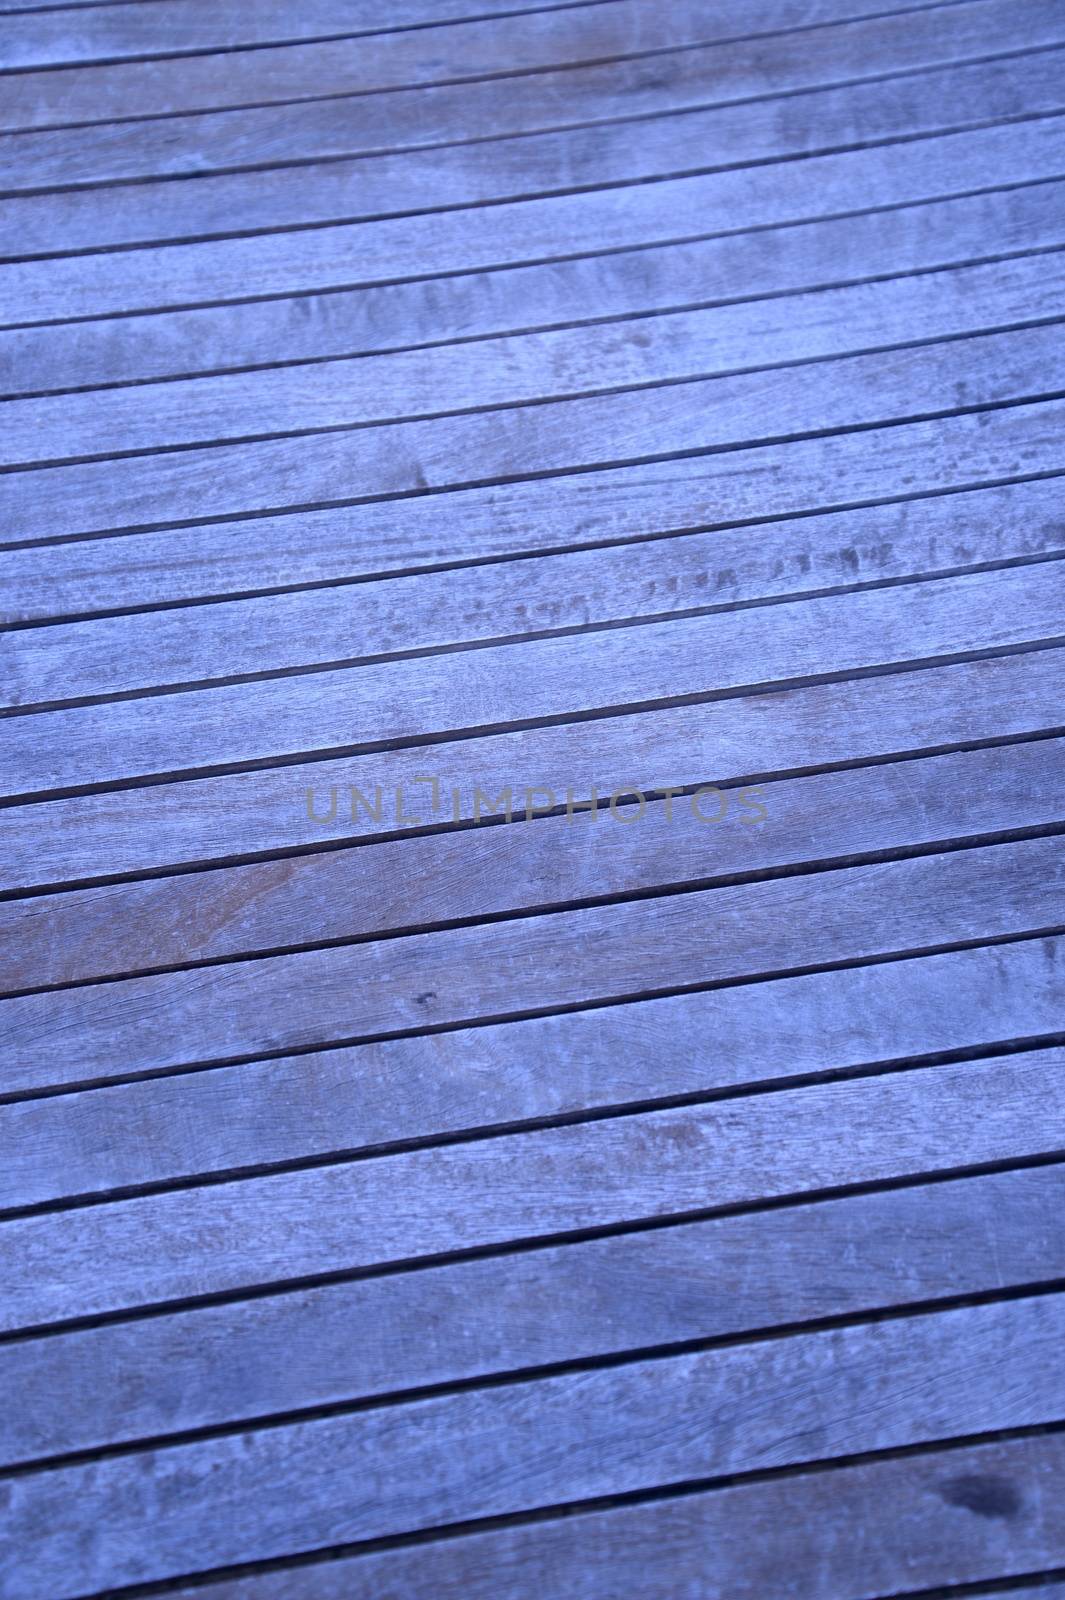 A close up shot of wooden timber decking